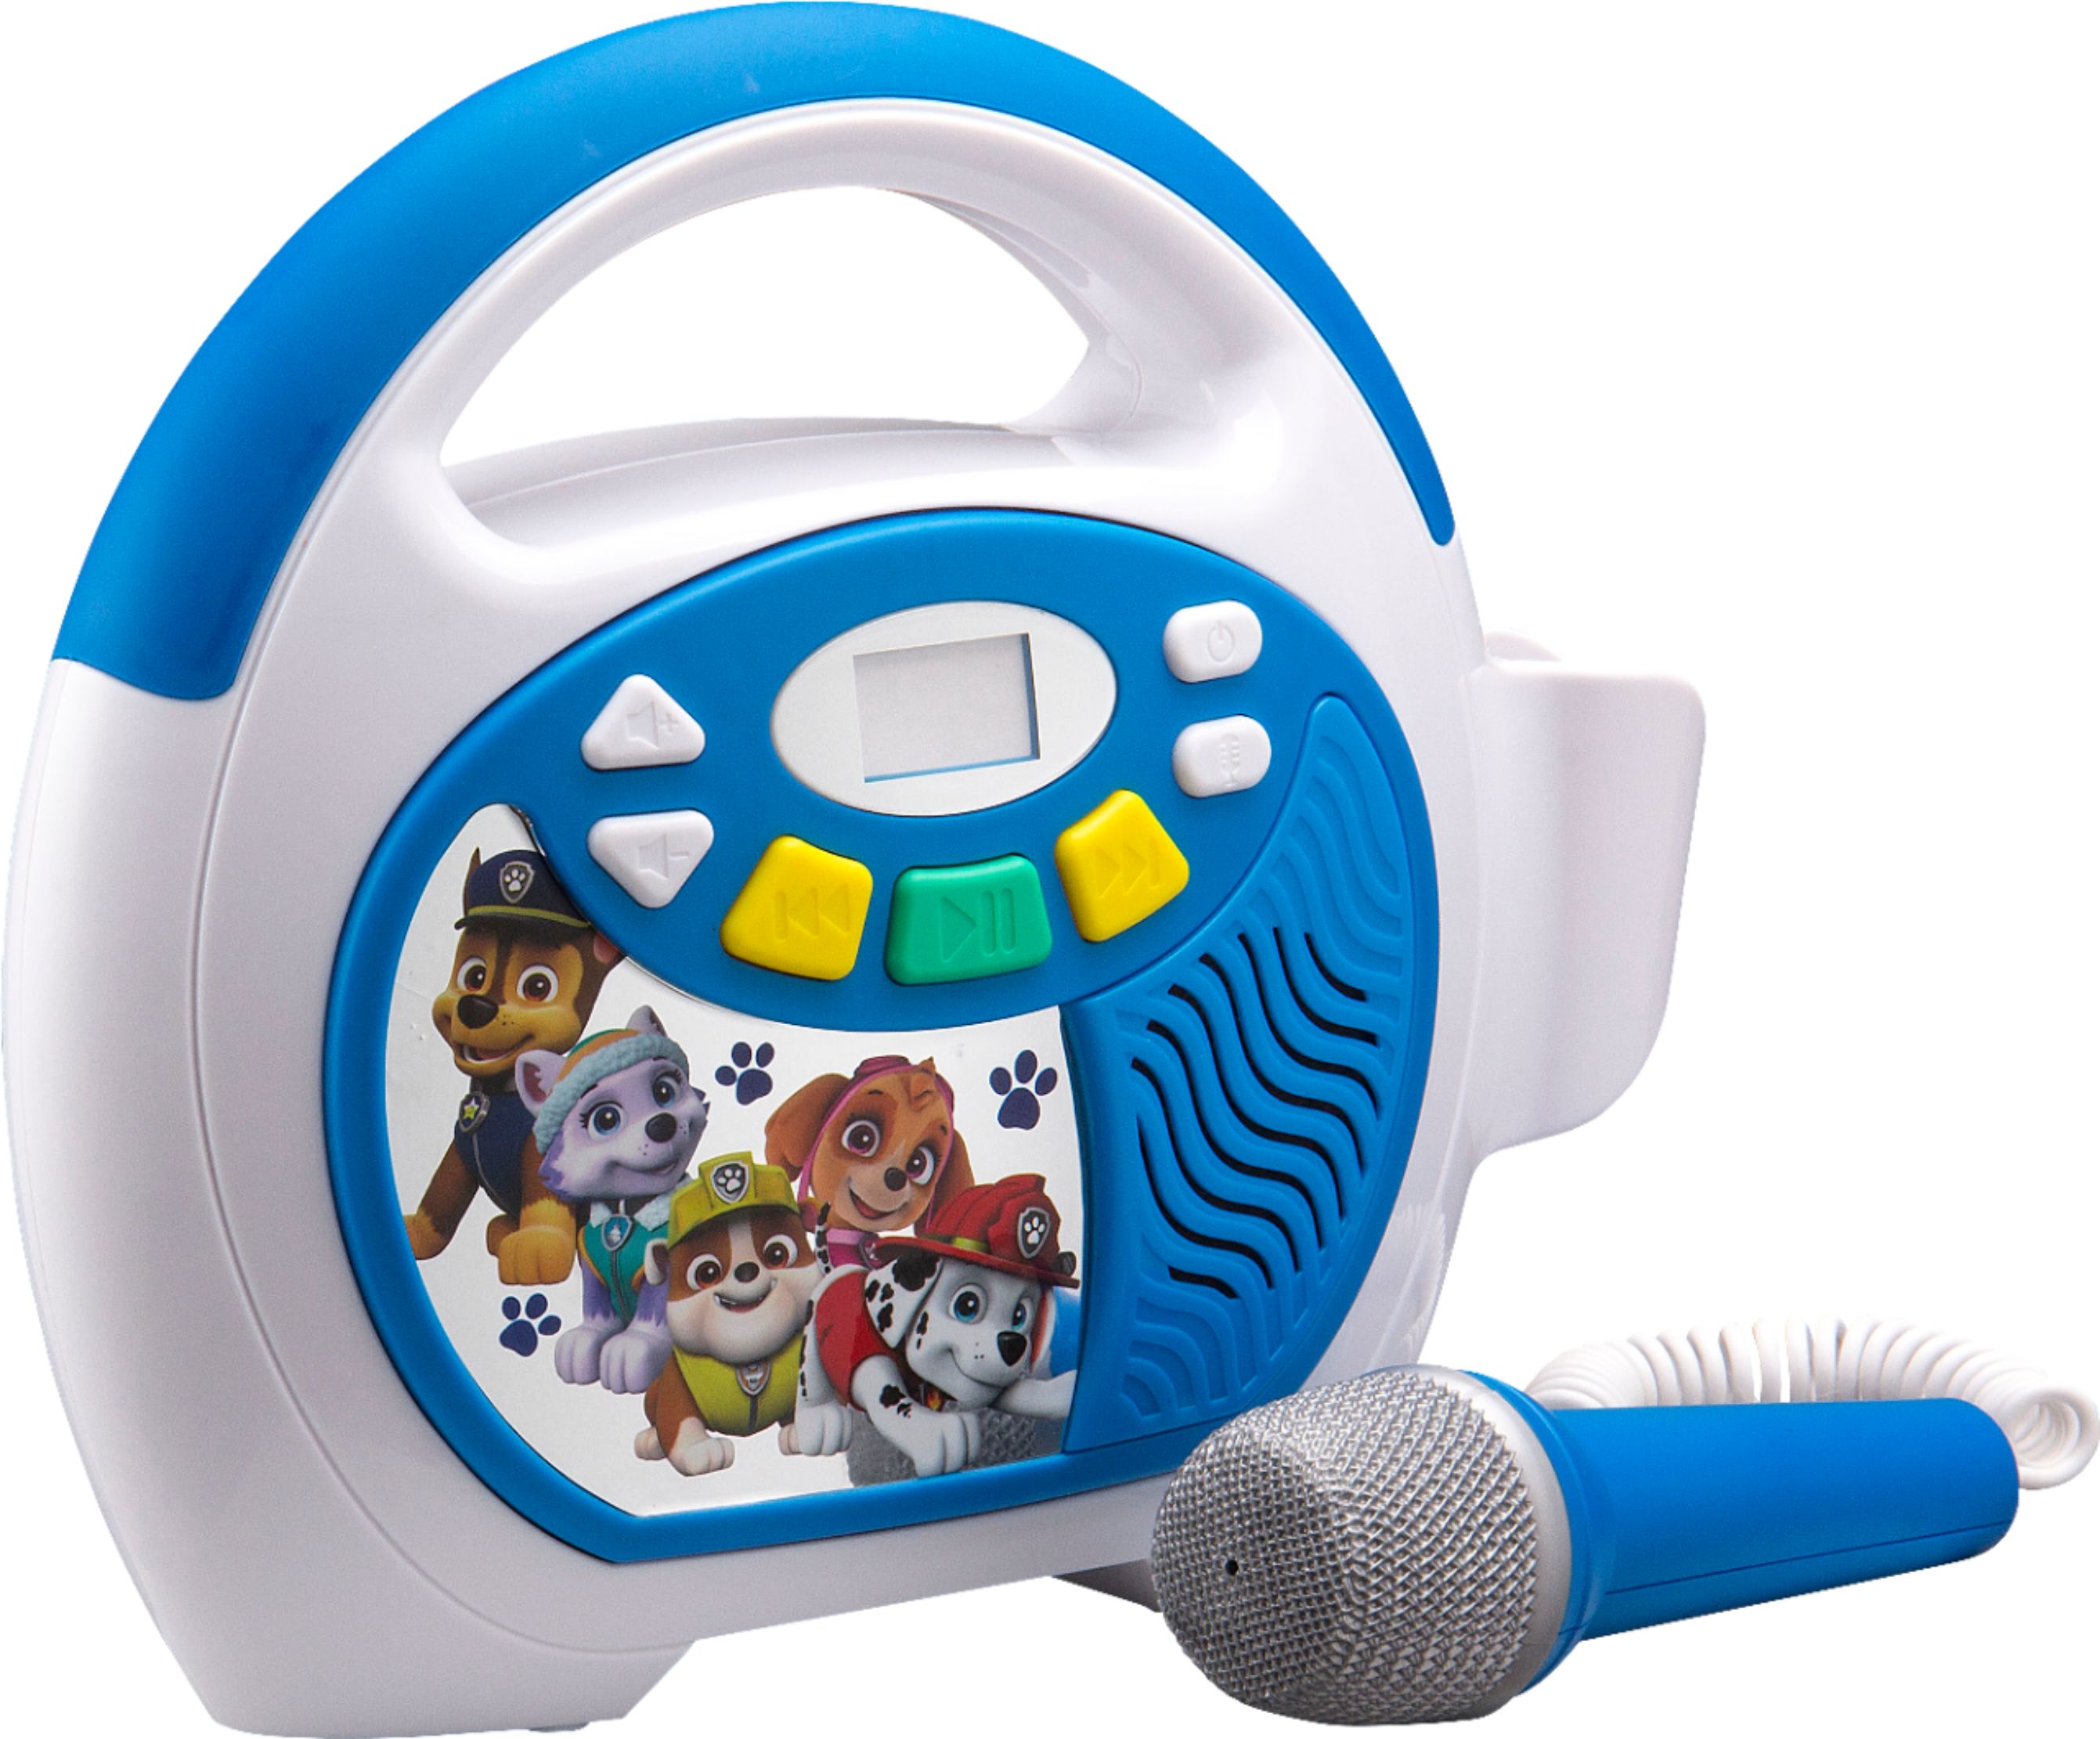 Angle View: KIDdesigns - Paw Patrol Bluetooth Sing Along MP3 Player - blue